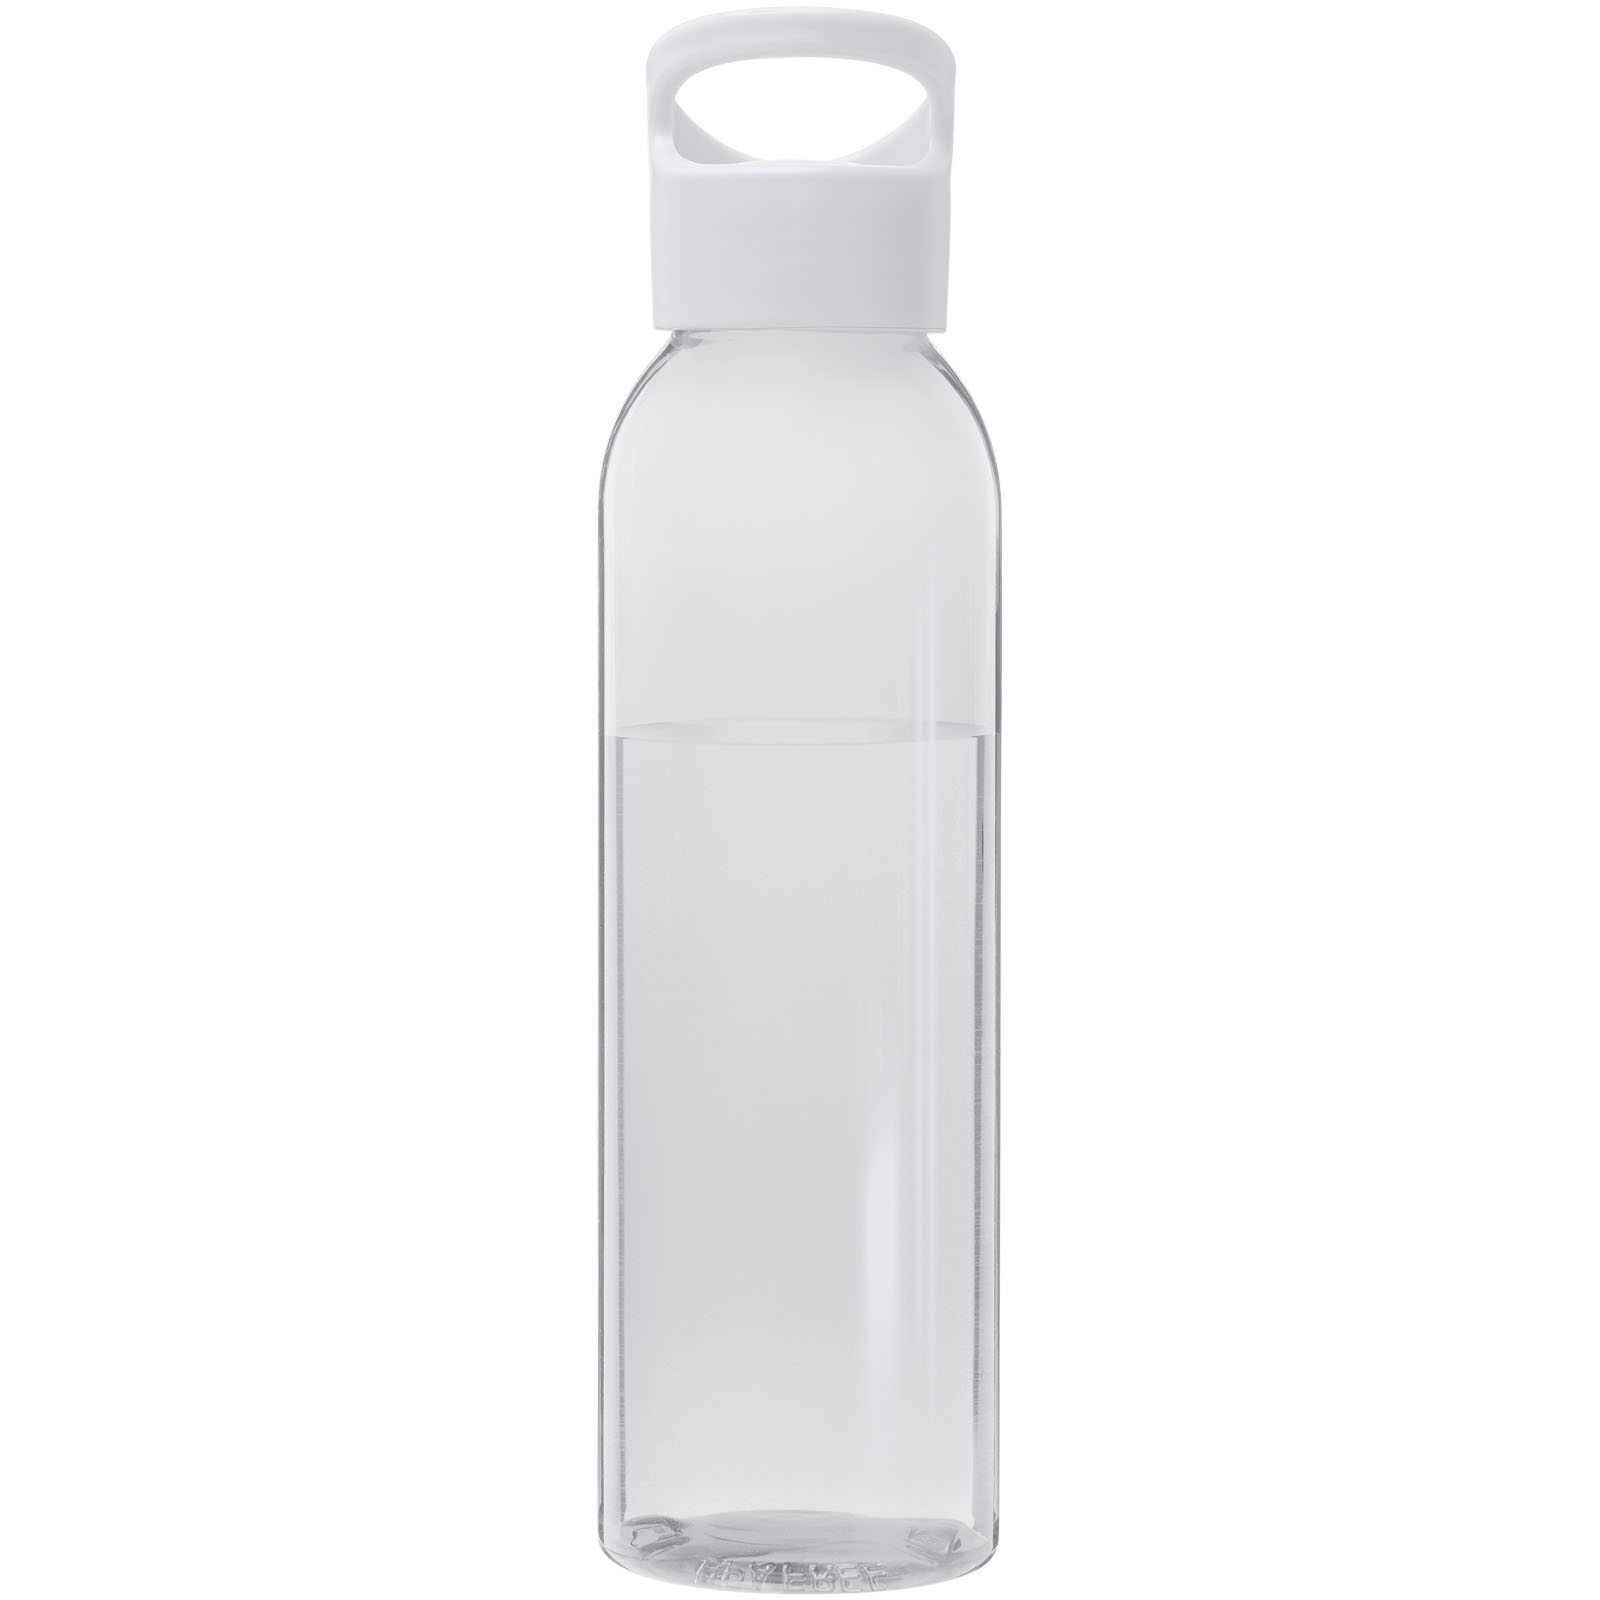 Advertising Water bottles - Sky 650 ml recycled plastic water bottle - 1